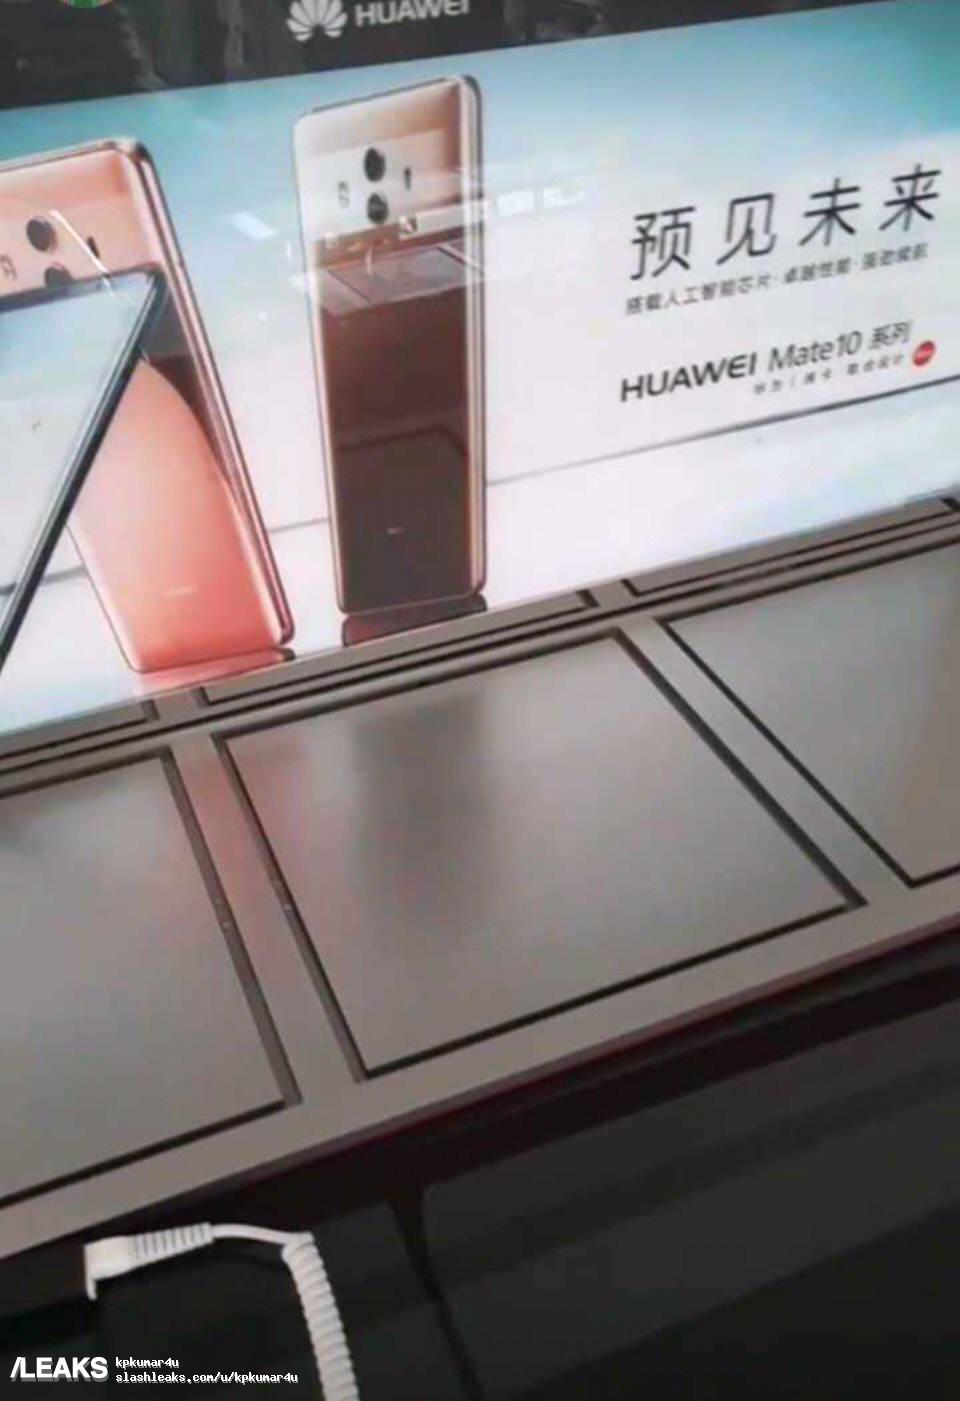 Huawei Mate 10 poster